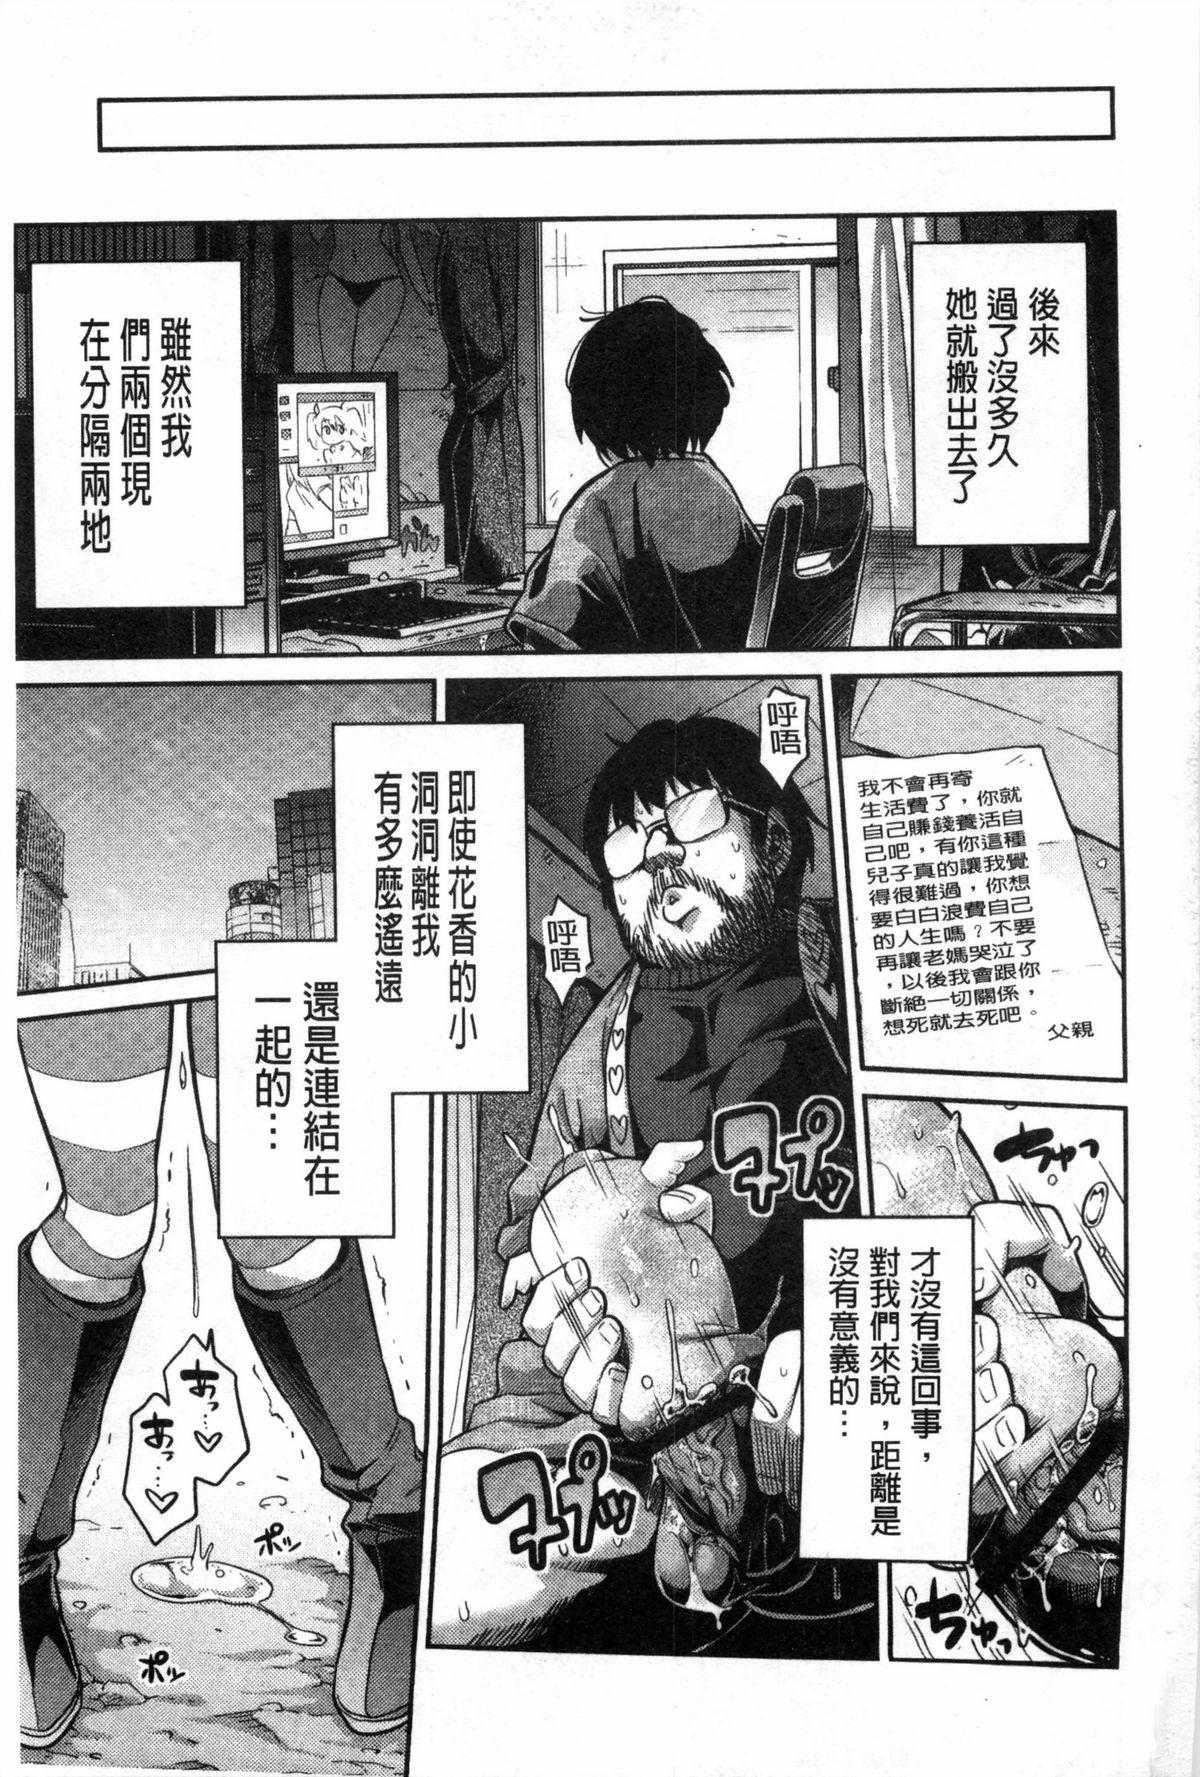 Man x Koi - Ero Manga de Hajimaru Koi no Plot | A漫×戀情 由情色漫畫所萌生的戀之物語 207